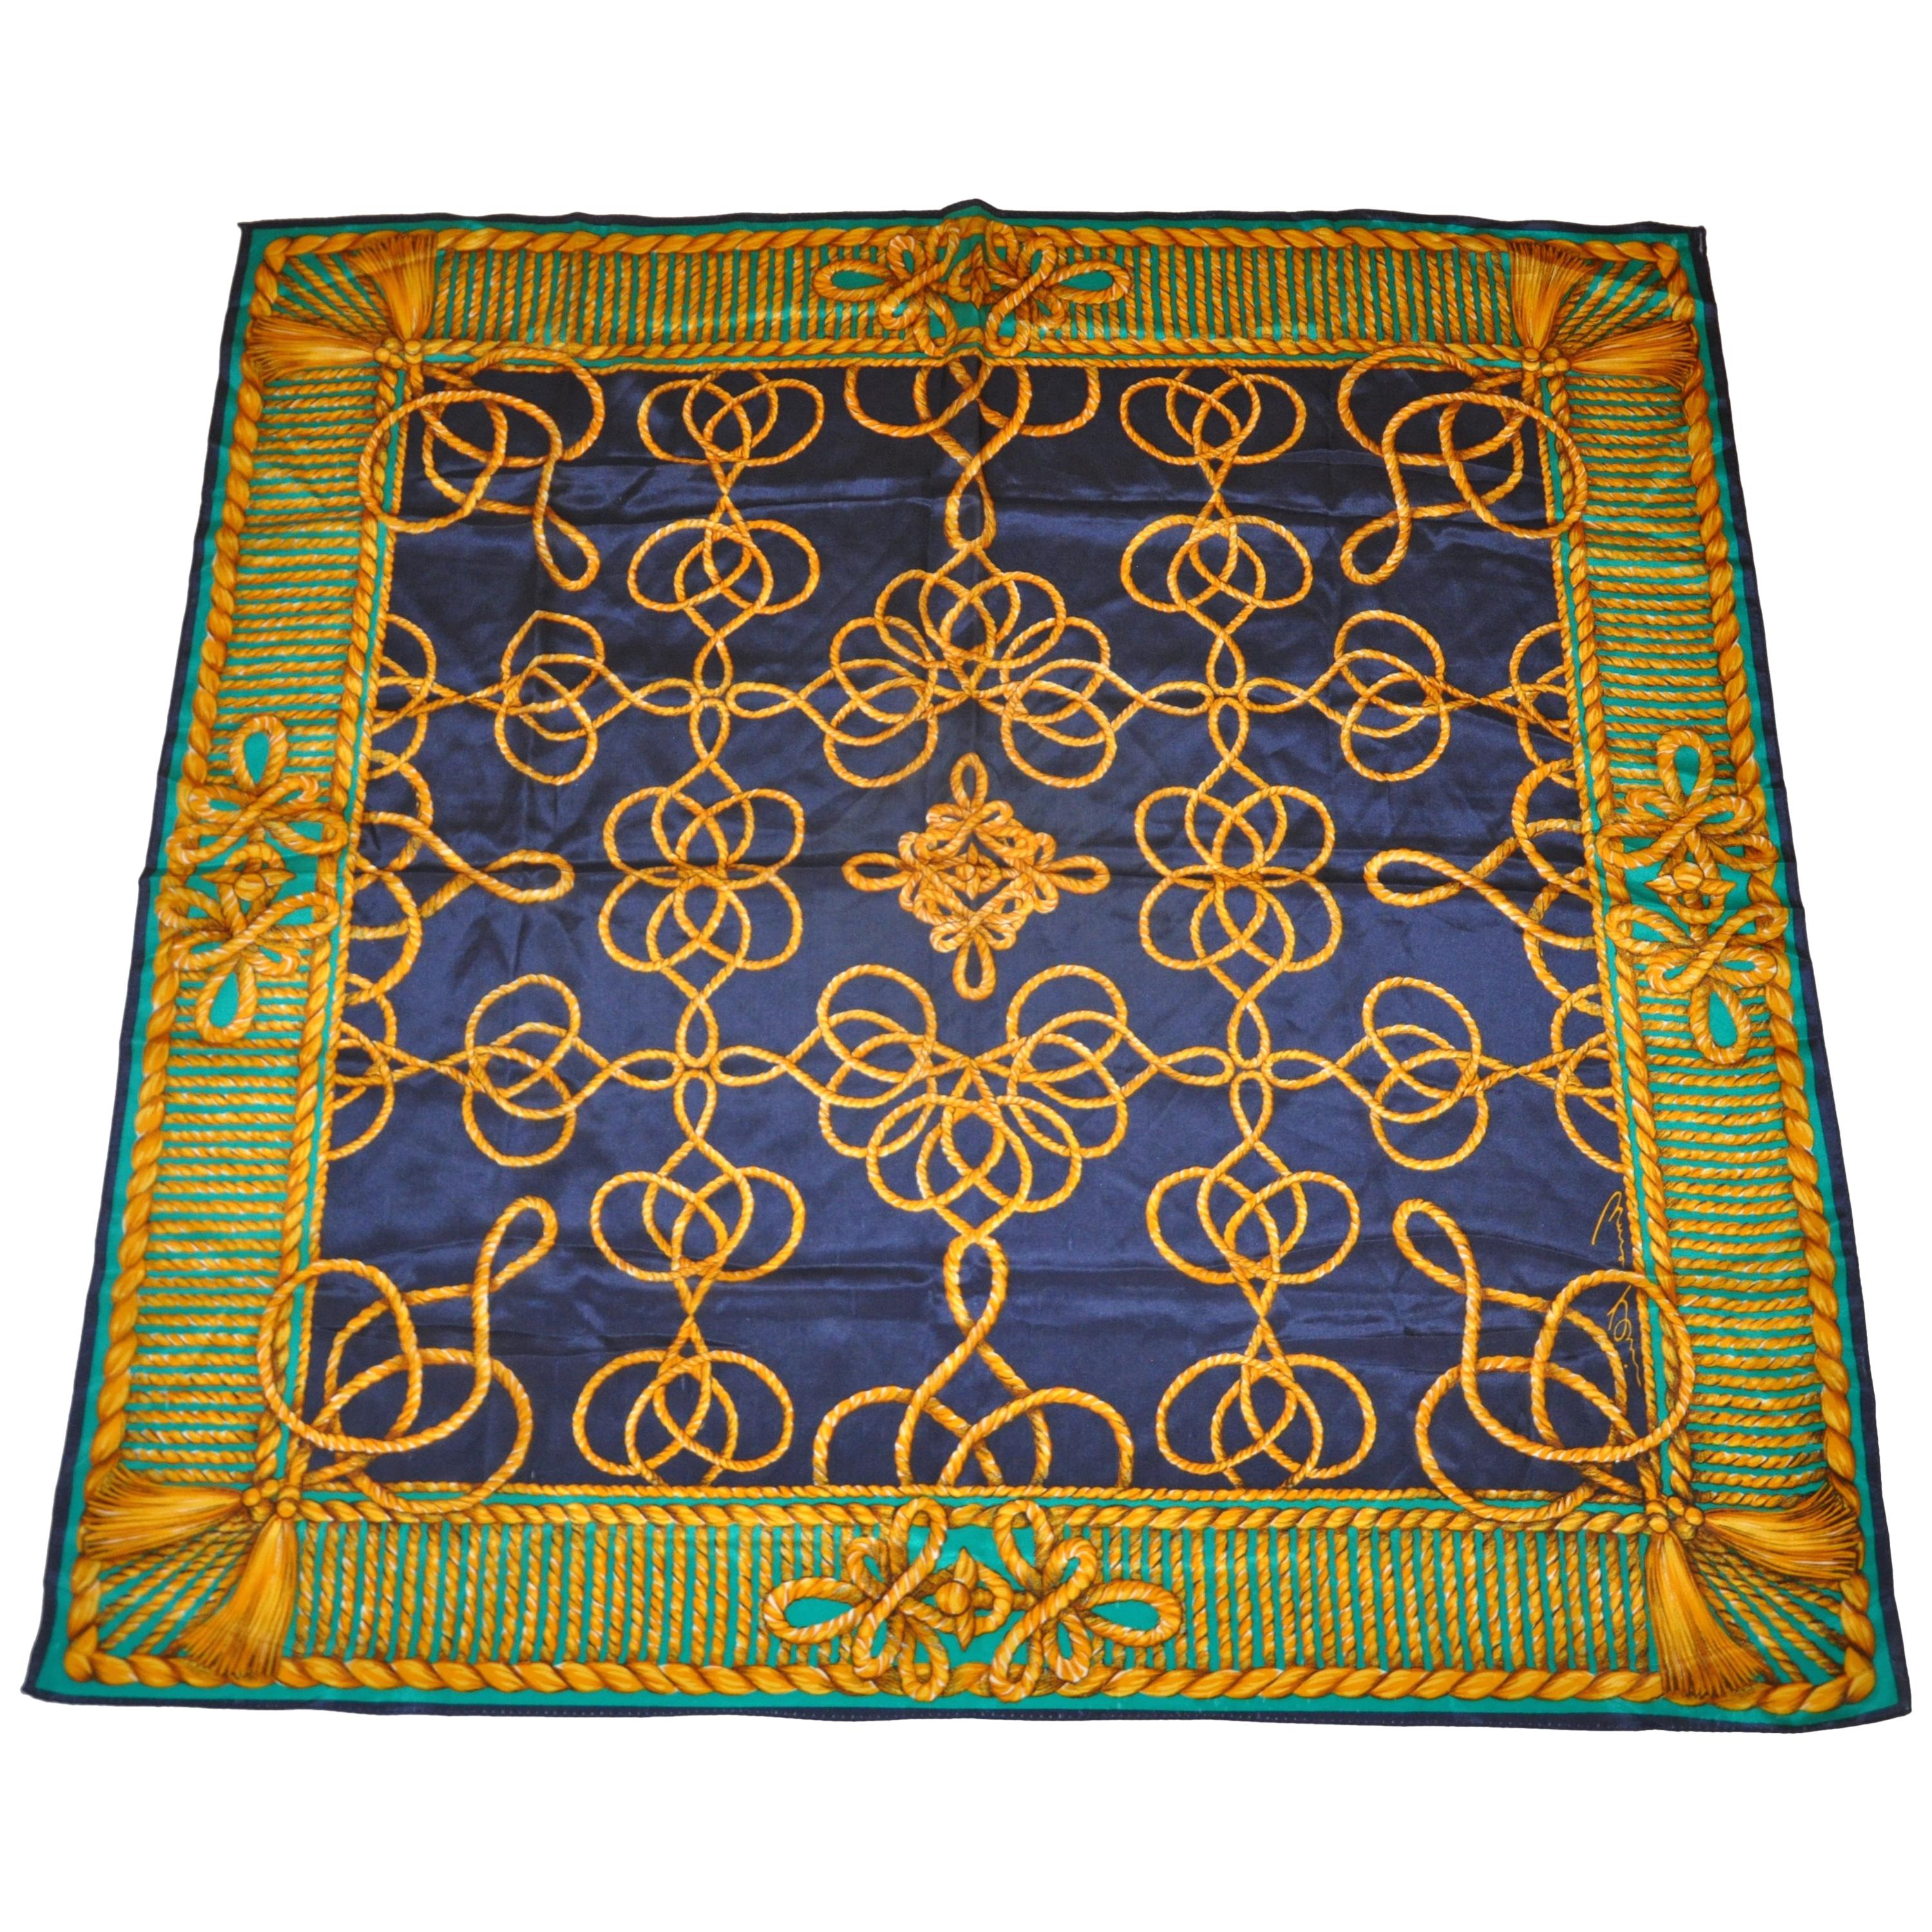 Anne Klein ""Decorative Golden Cord & Tassel" avec écharpe en soie bleu marine et verte en vente